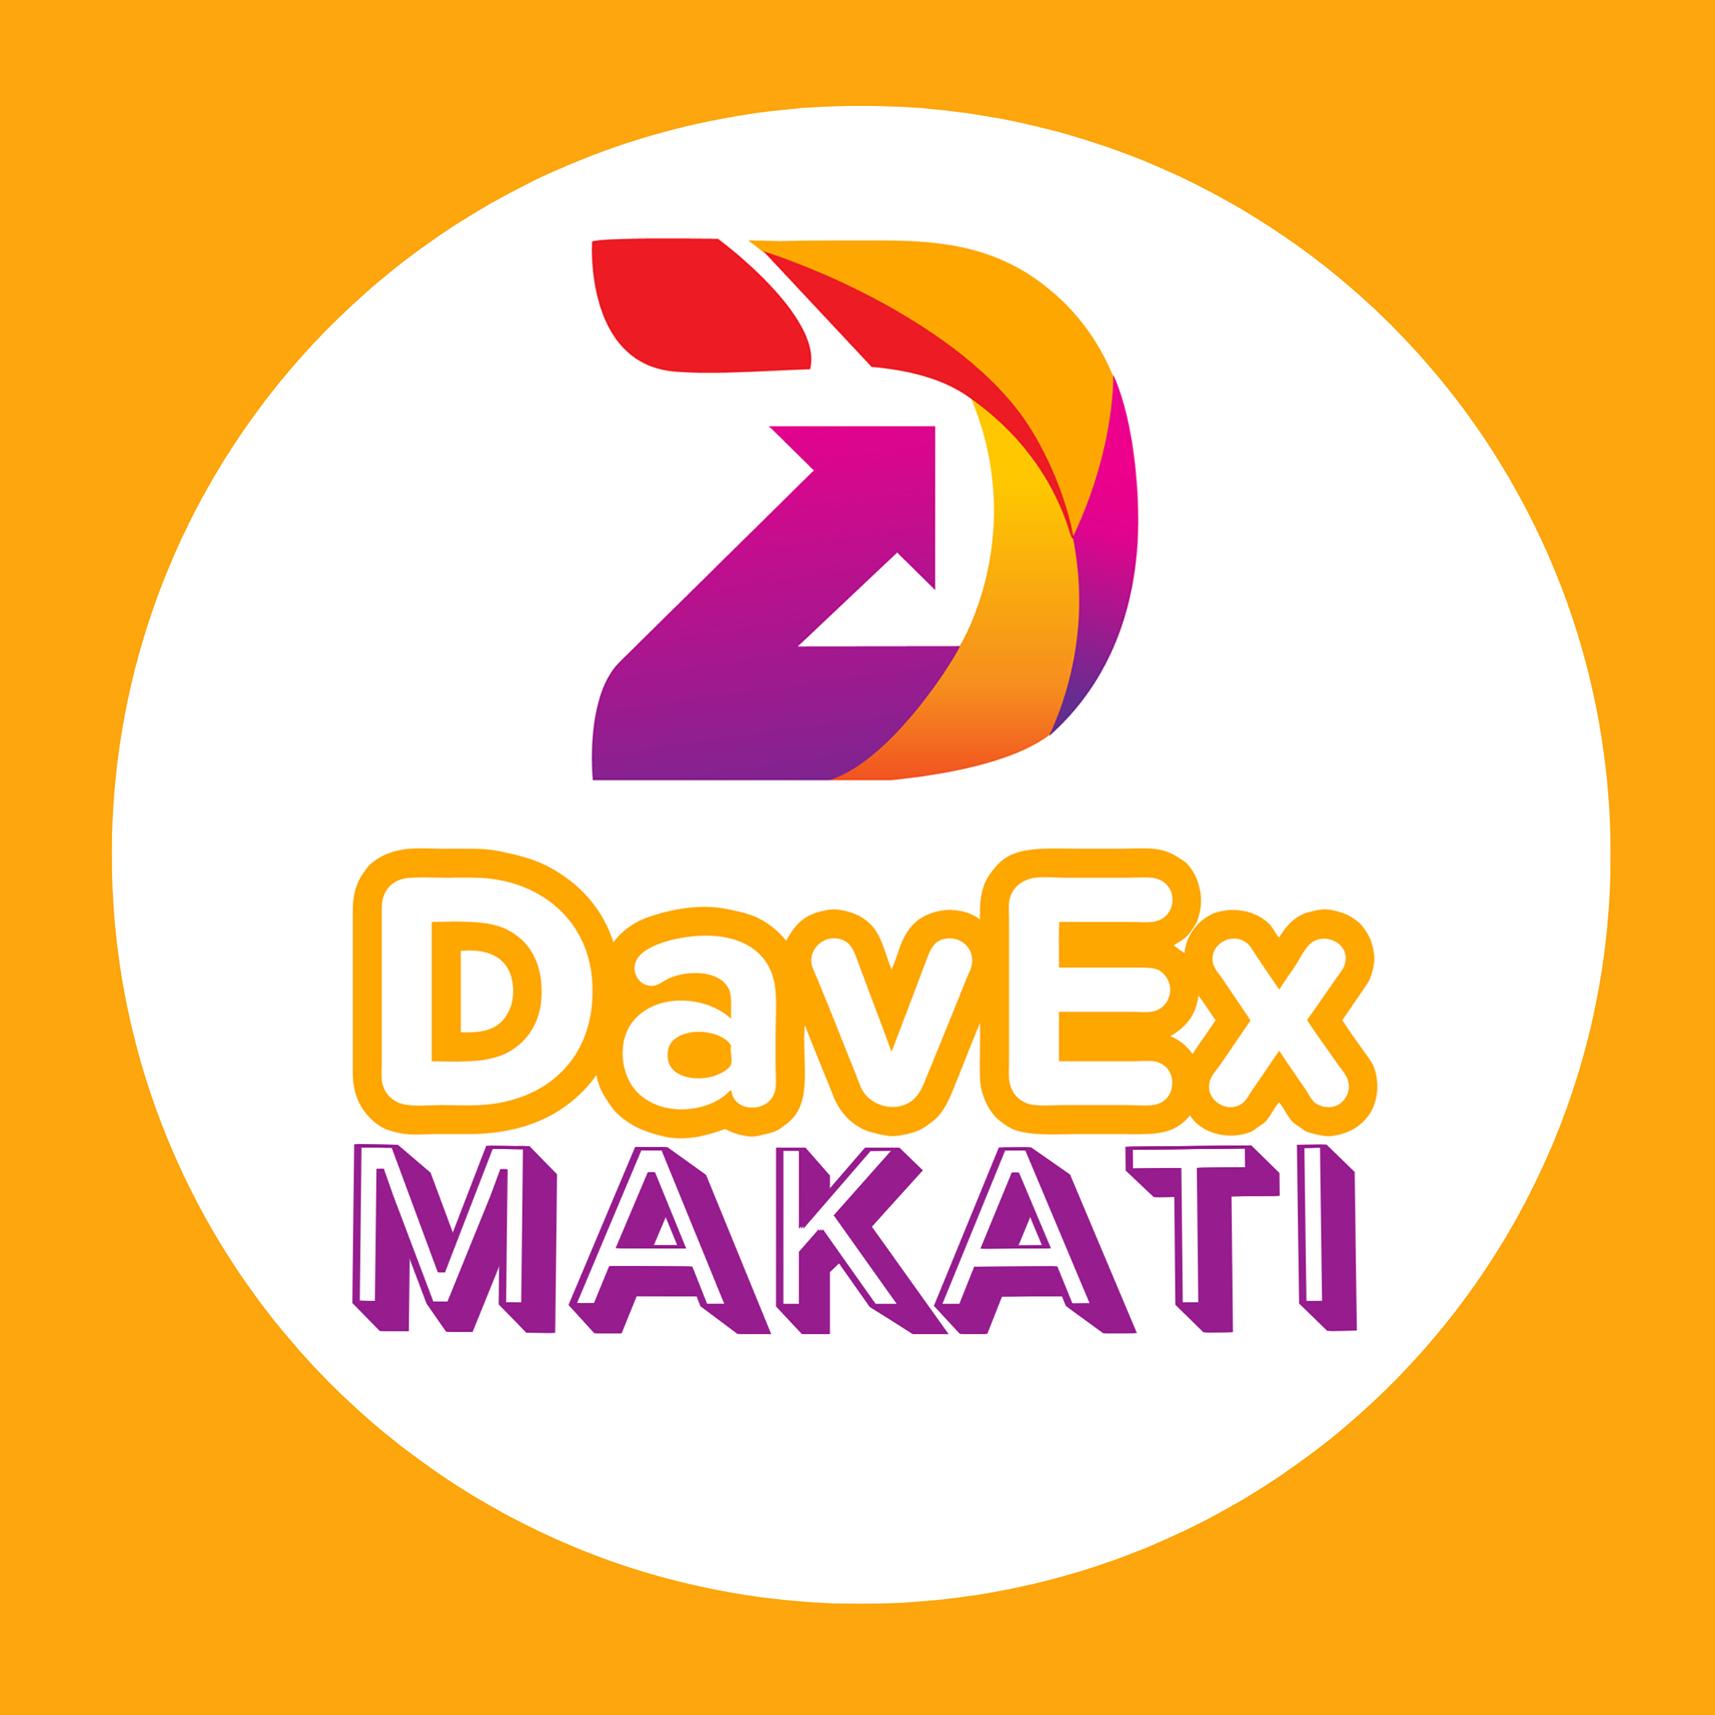 DavEx Makati operatedbyLememor Trading and Service